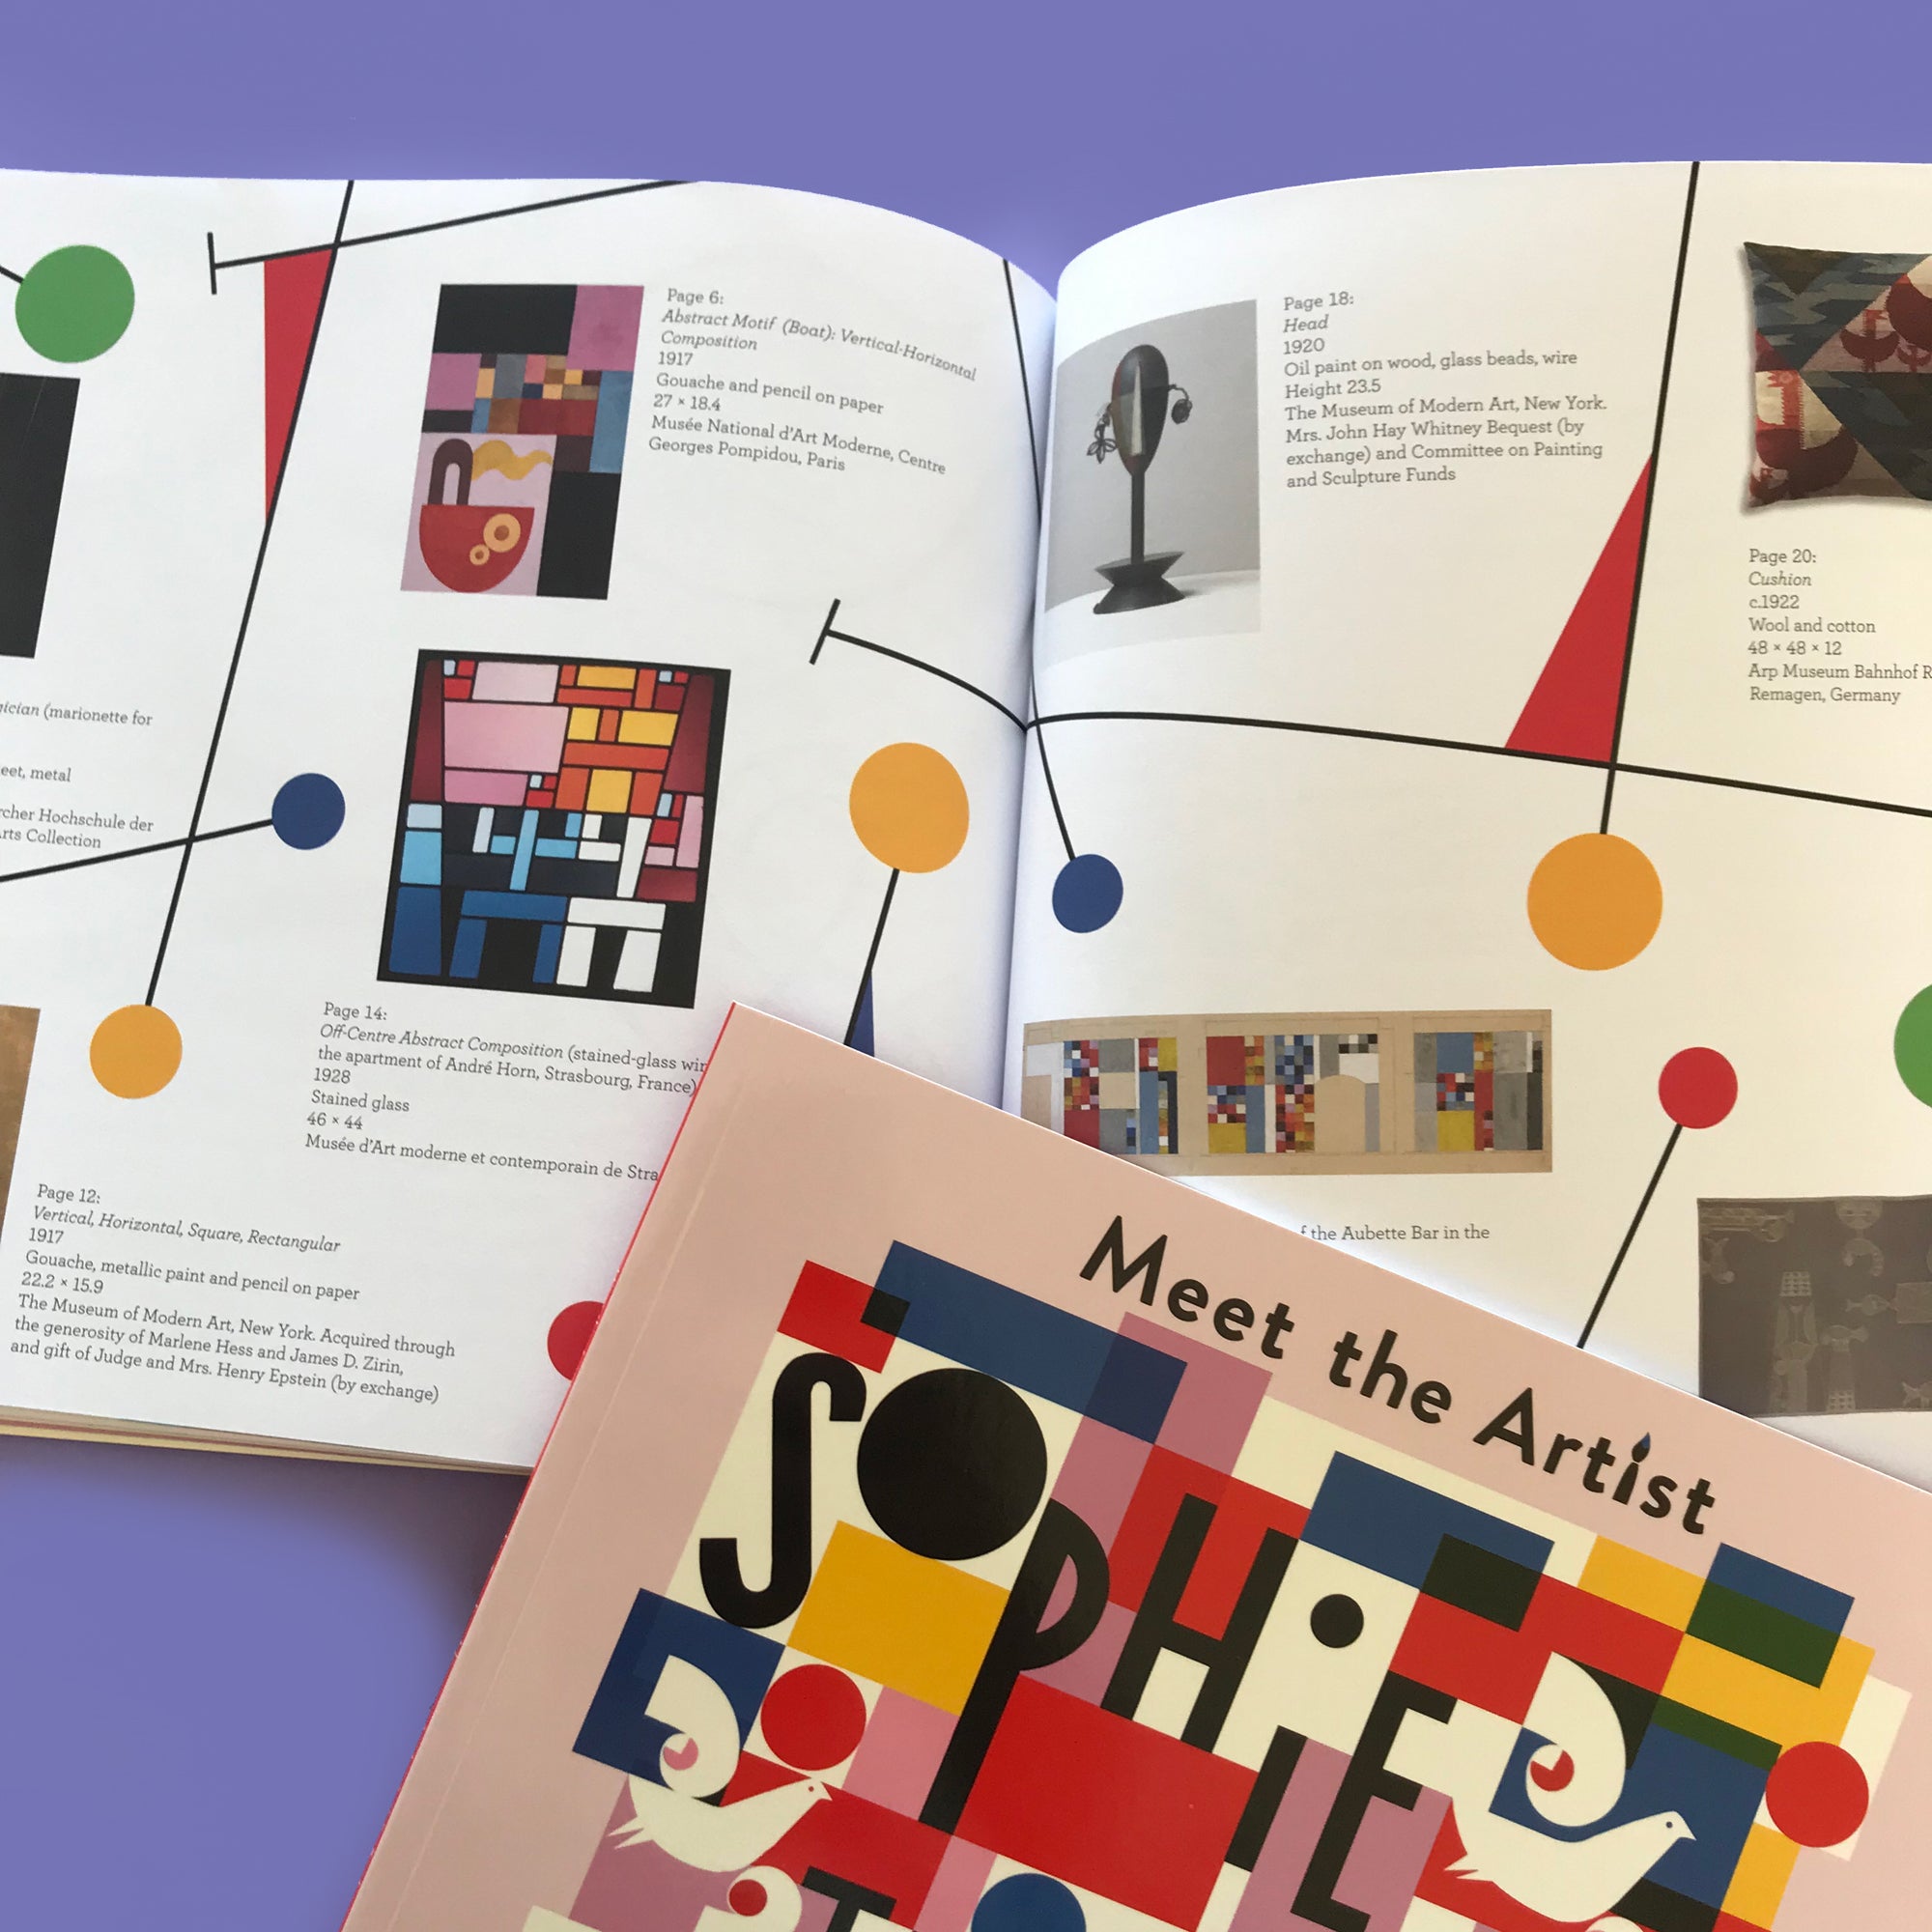 Meet the Artist: Sophie Taeuber-Arp activity book